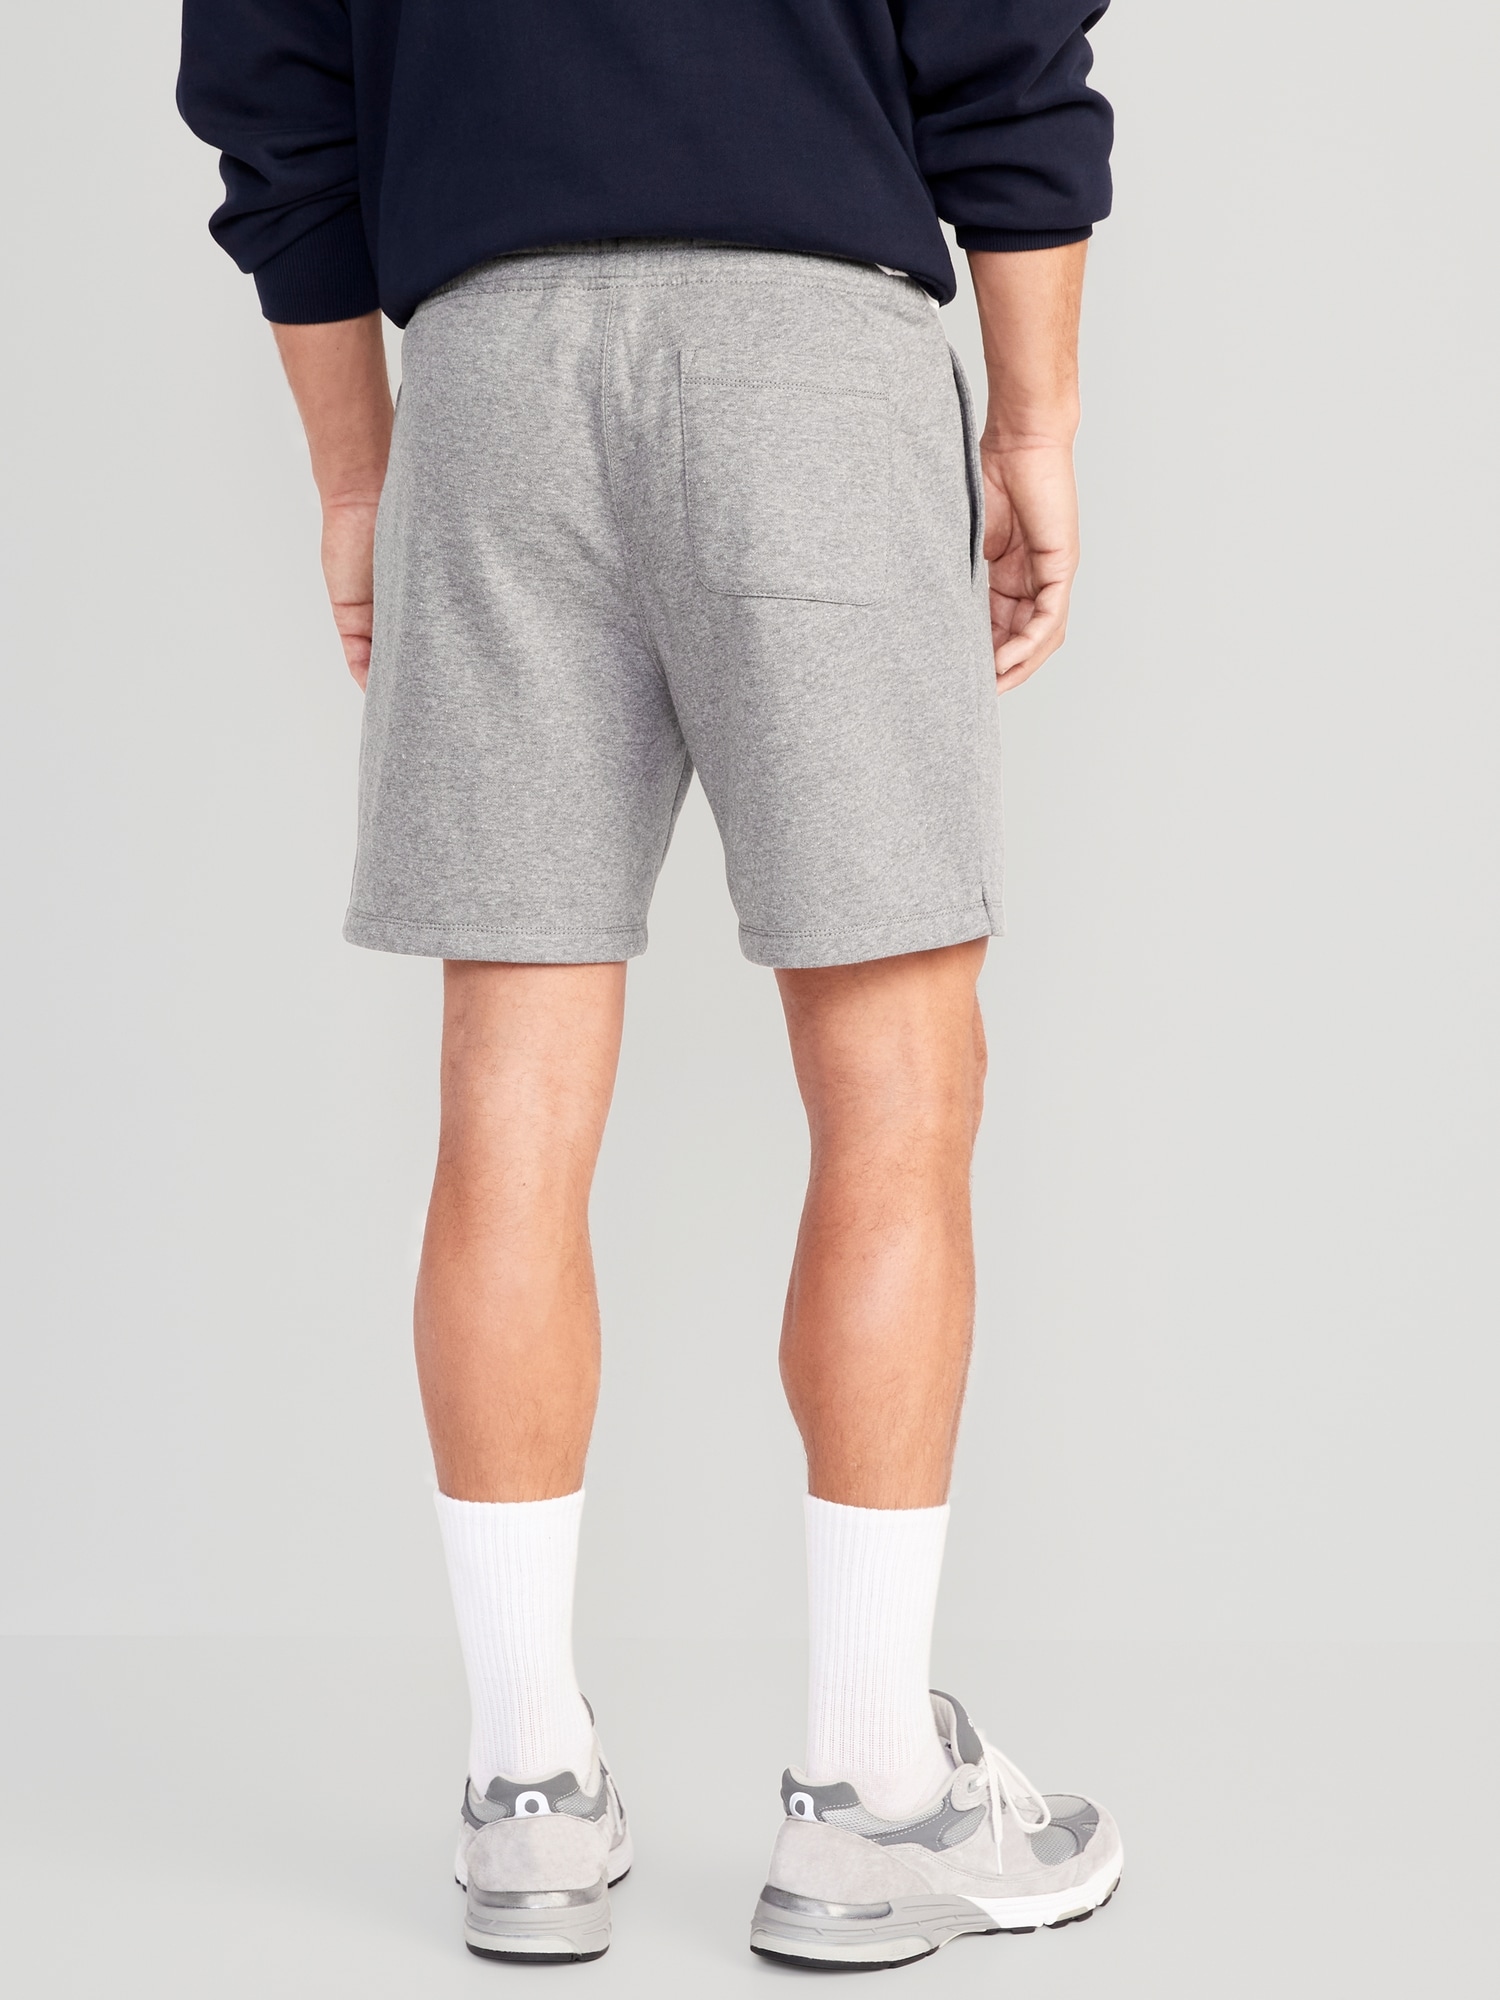 2-Pack Fleece Sweat Shorts for Men -- 7-inch inseam | Old Navy